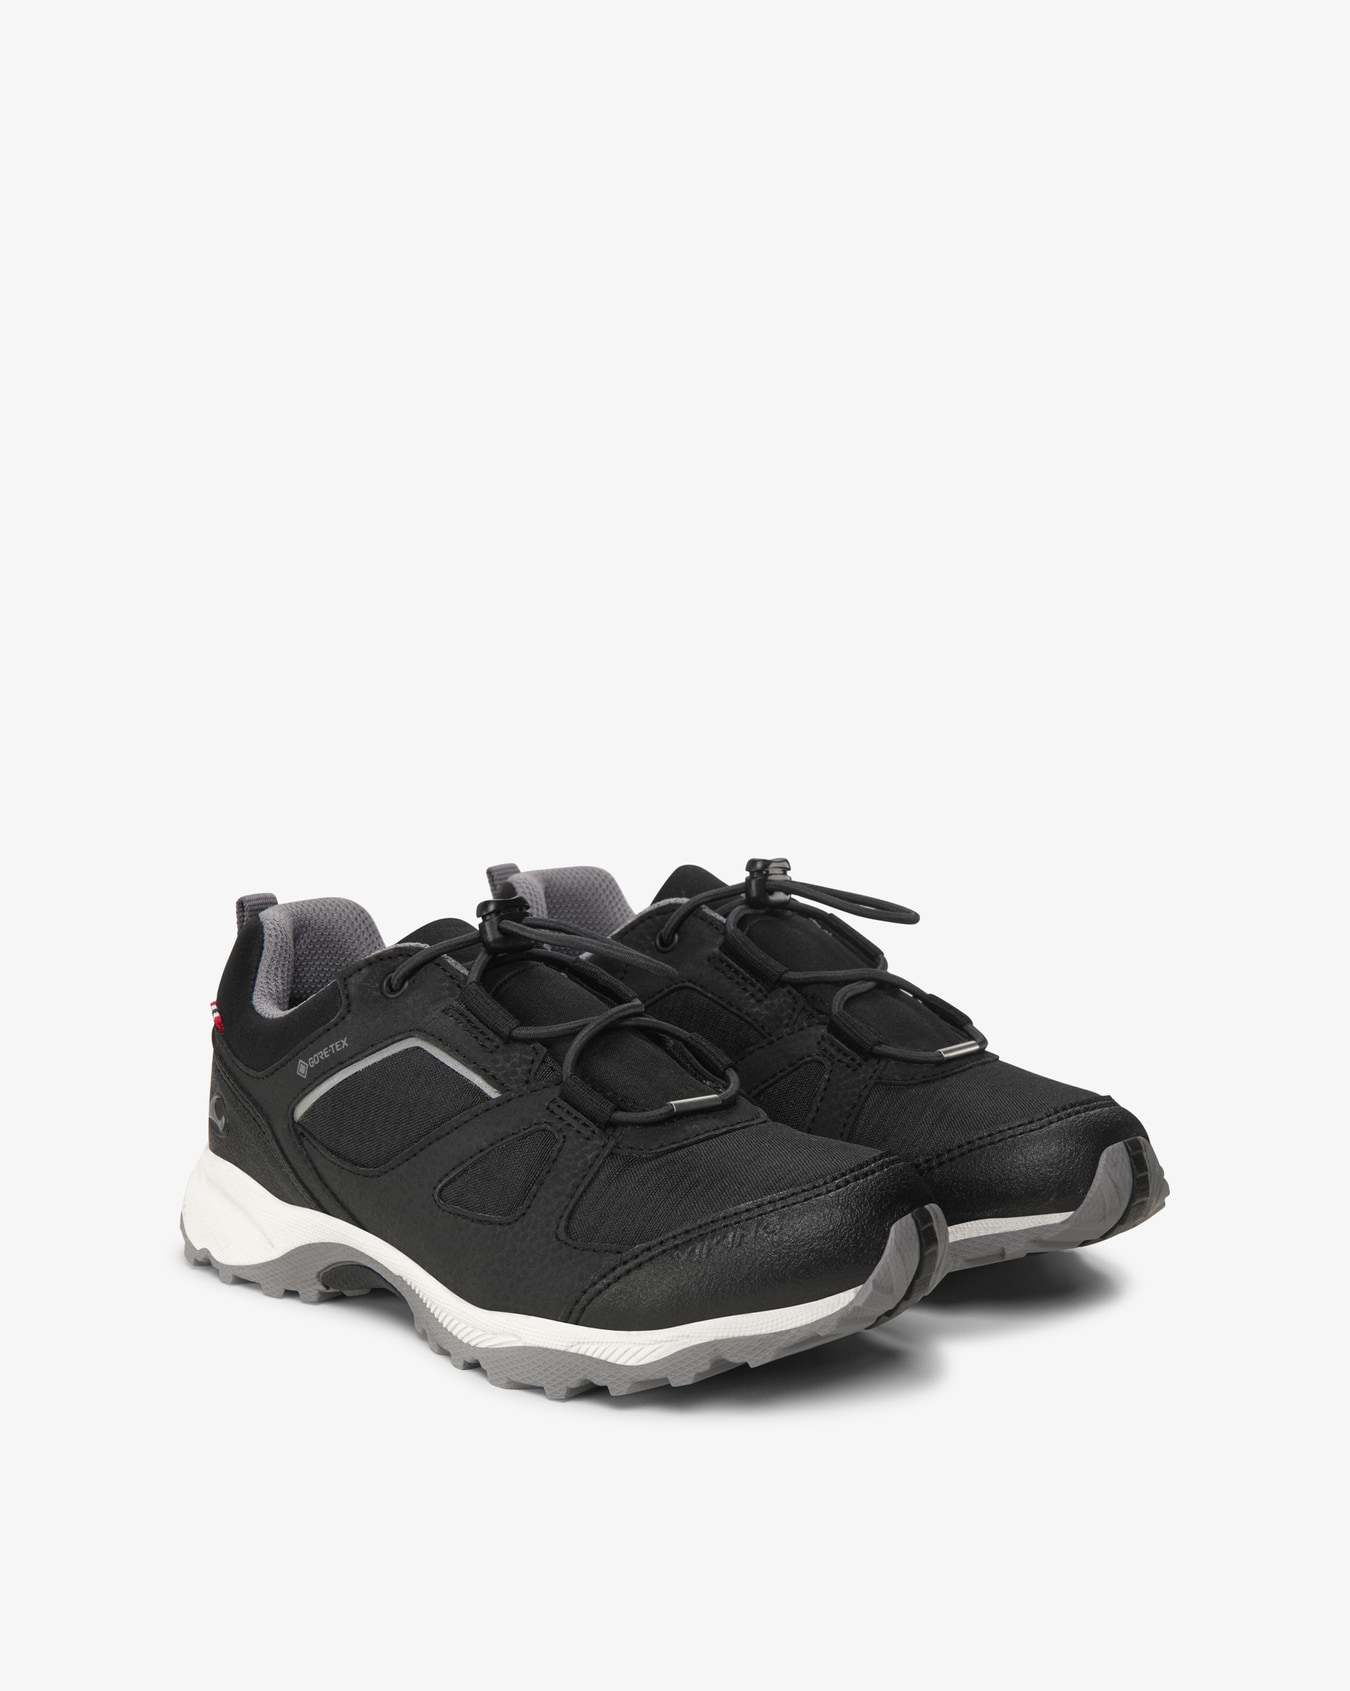 Nator Low GTX Black/Granite Sneaker